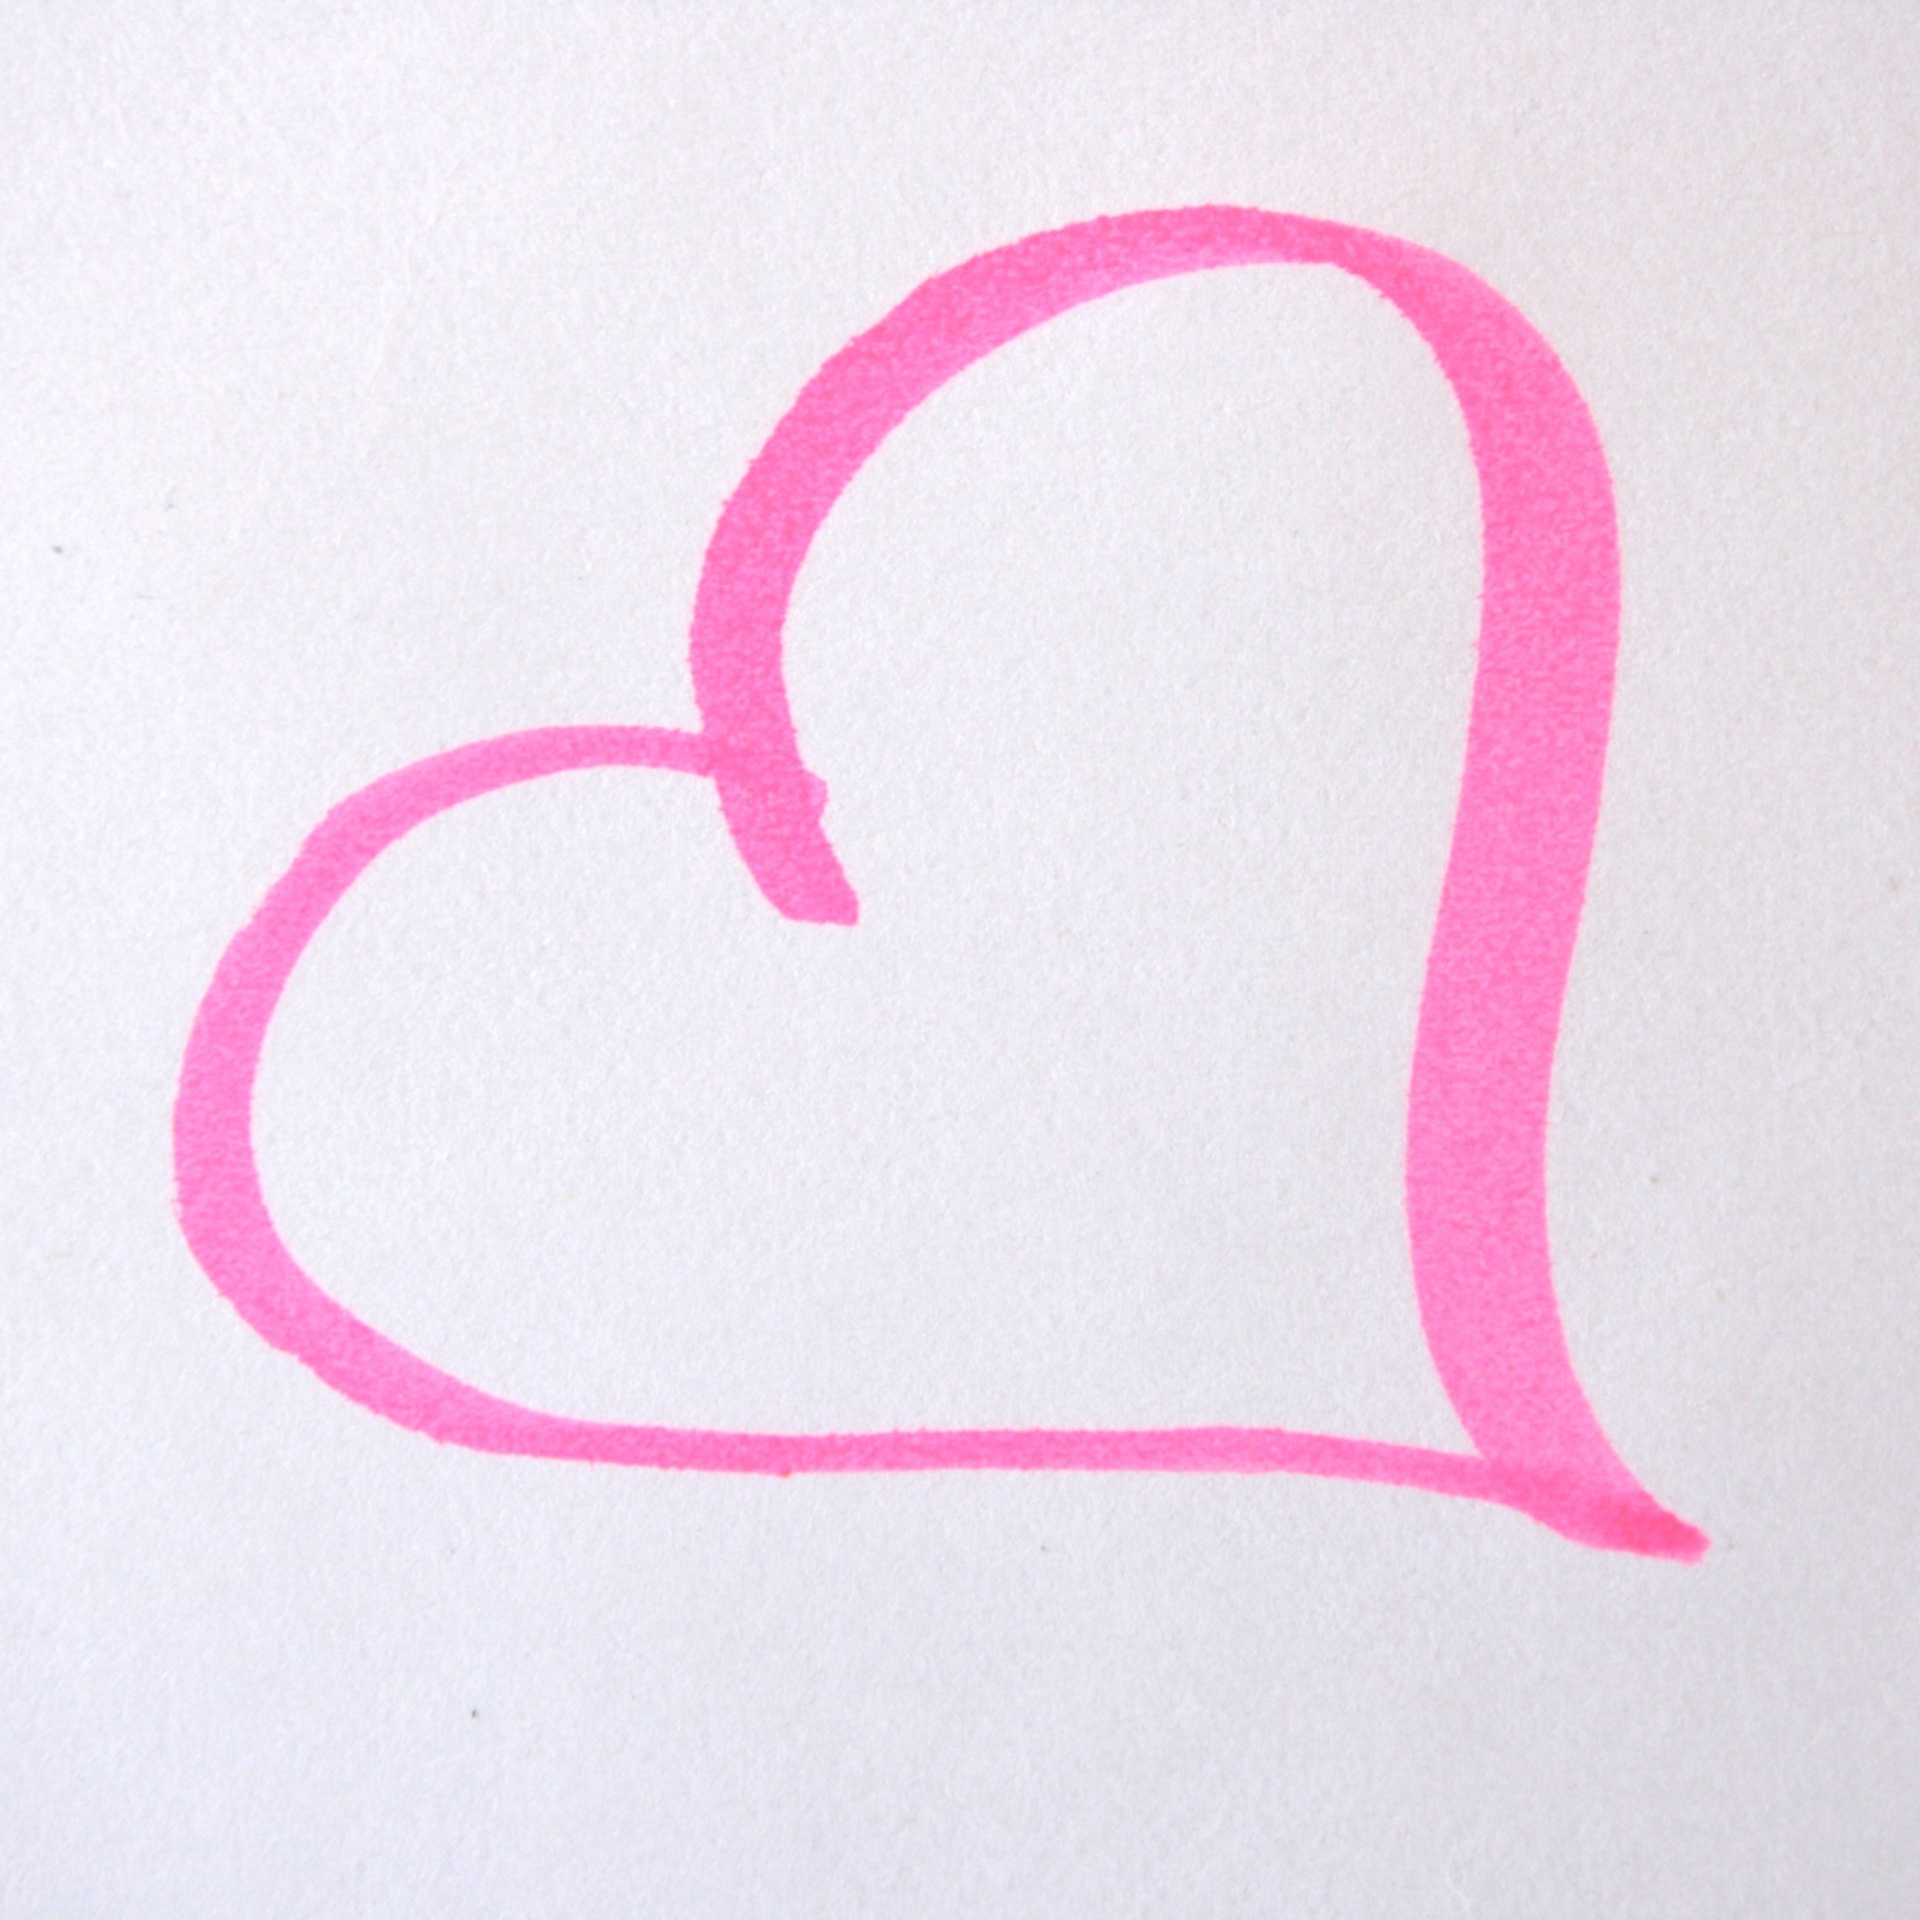 Consideravelmente Pink Heart Drawn